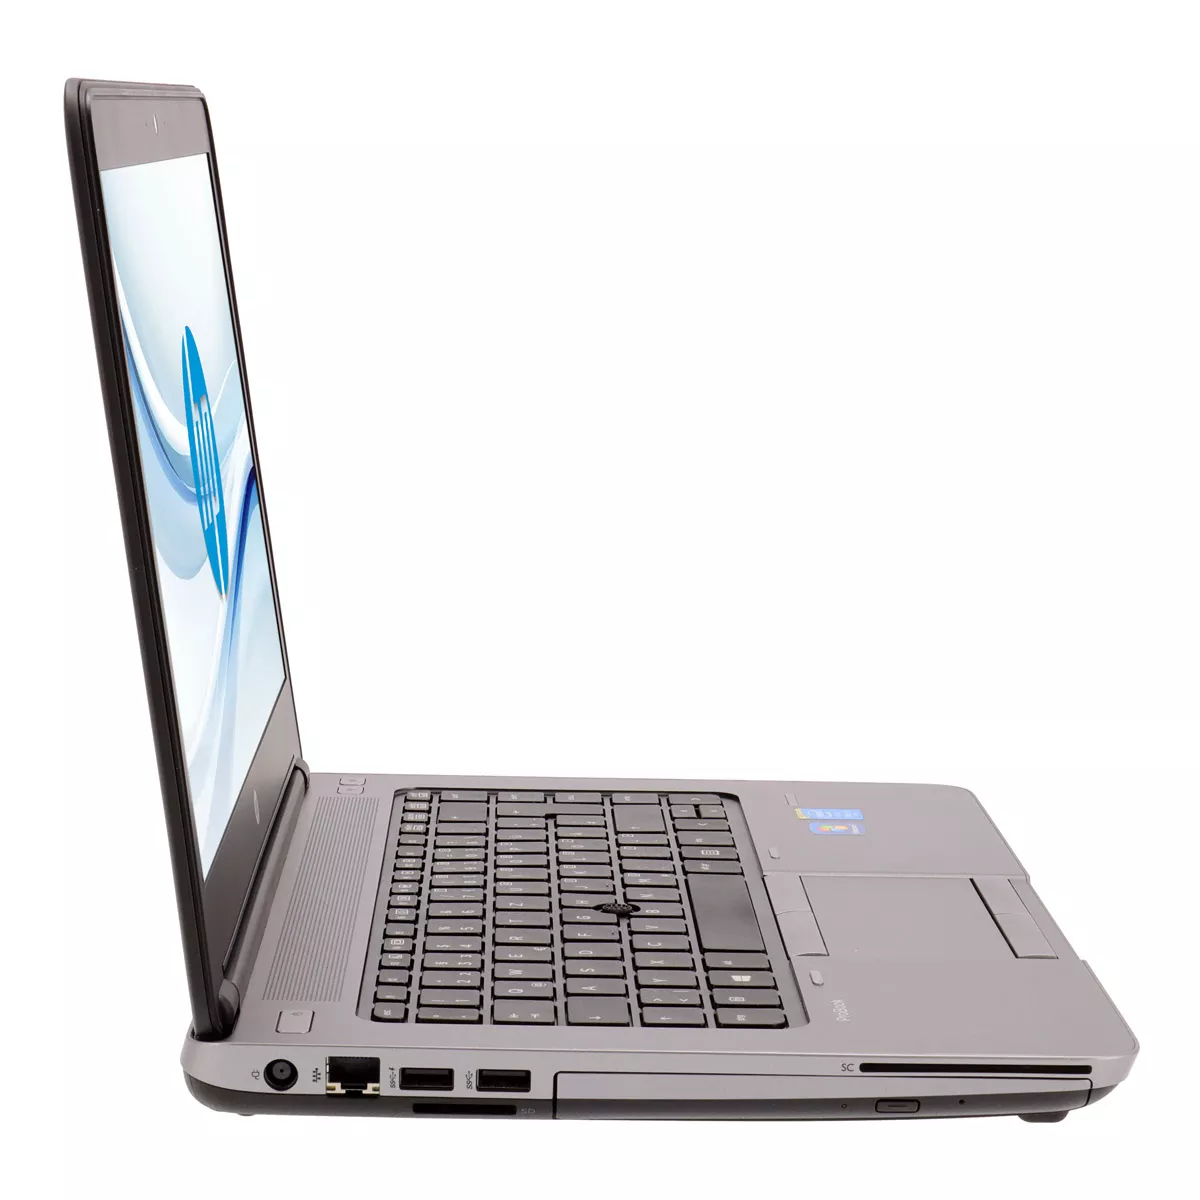 HP ProBook 640 G1 Core i5 4300M 2,60 GHz 8 GB 128 GB Webcam A